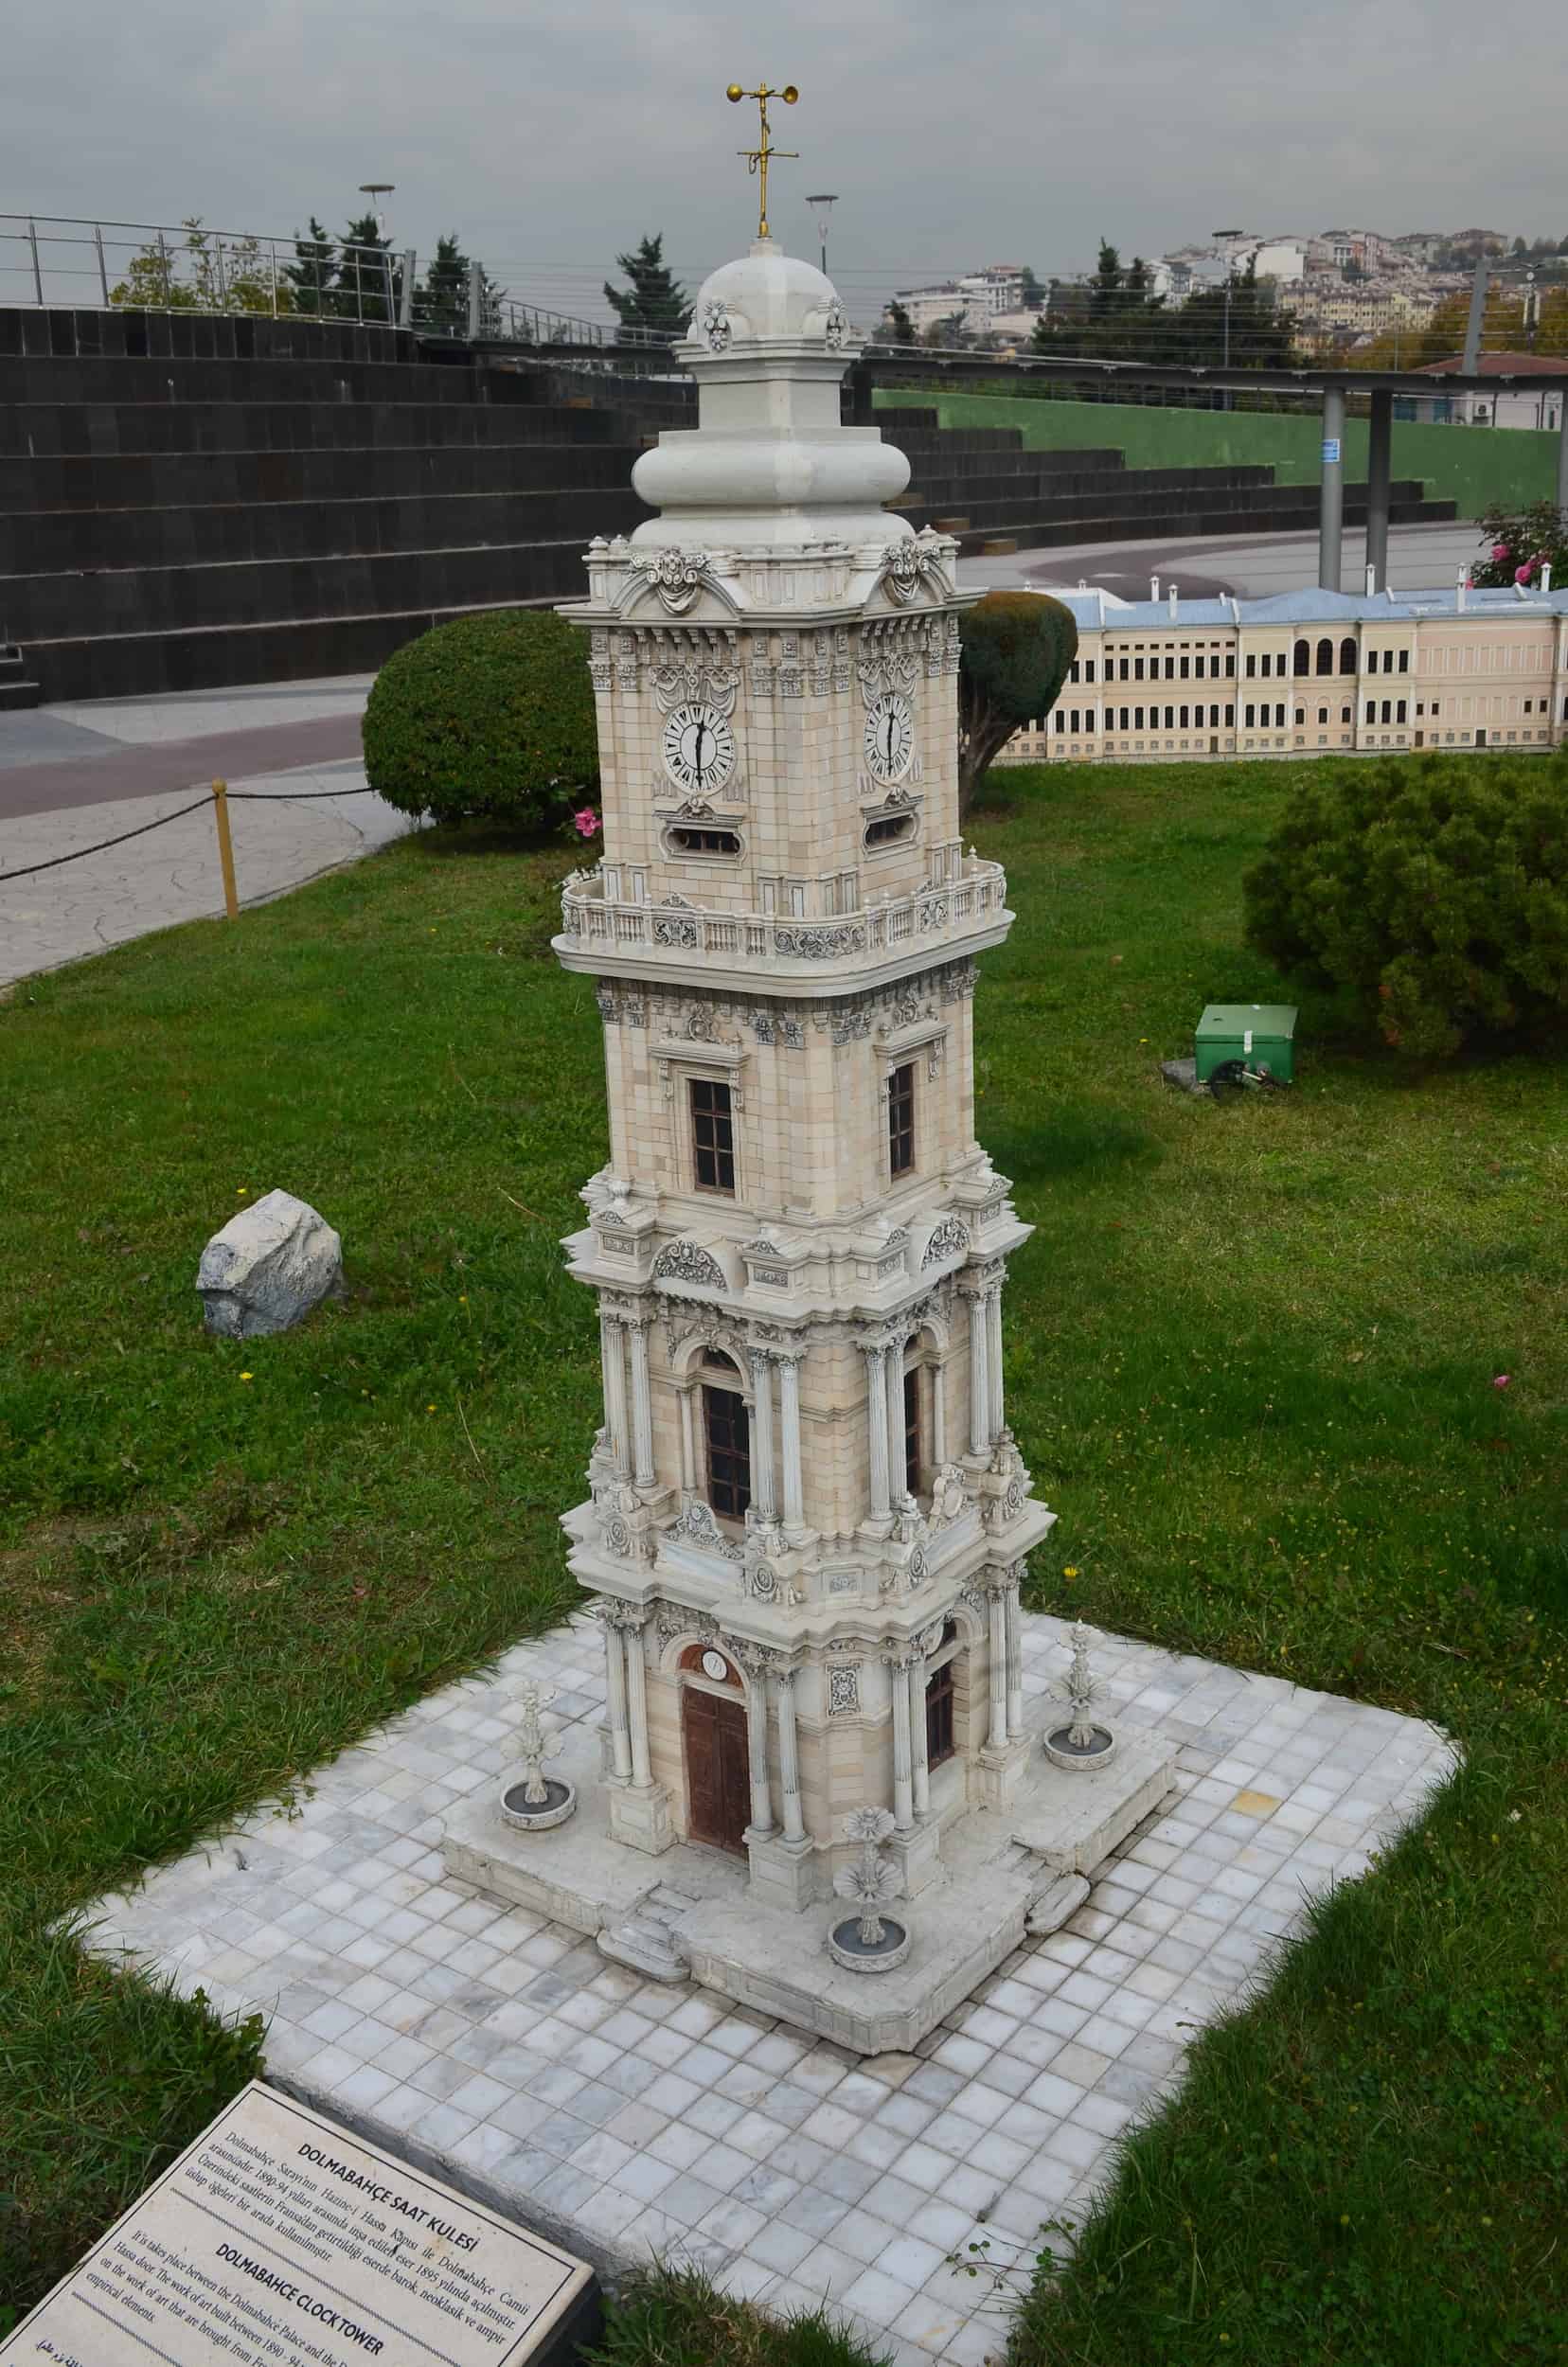 Model of the Dolmabahçe Clock Tower, Dolmabahçe, 19th century at Miniatürk in Istanbul, Turkey